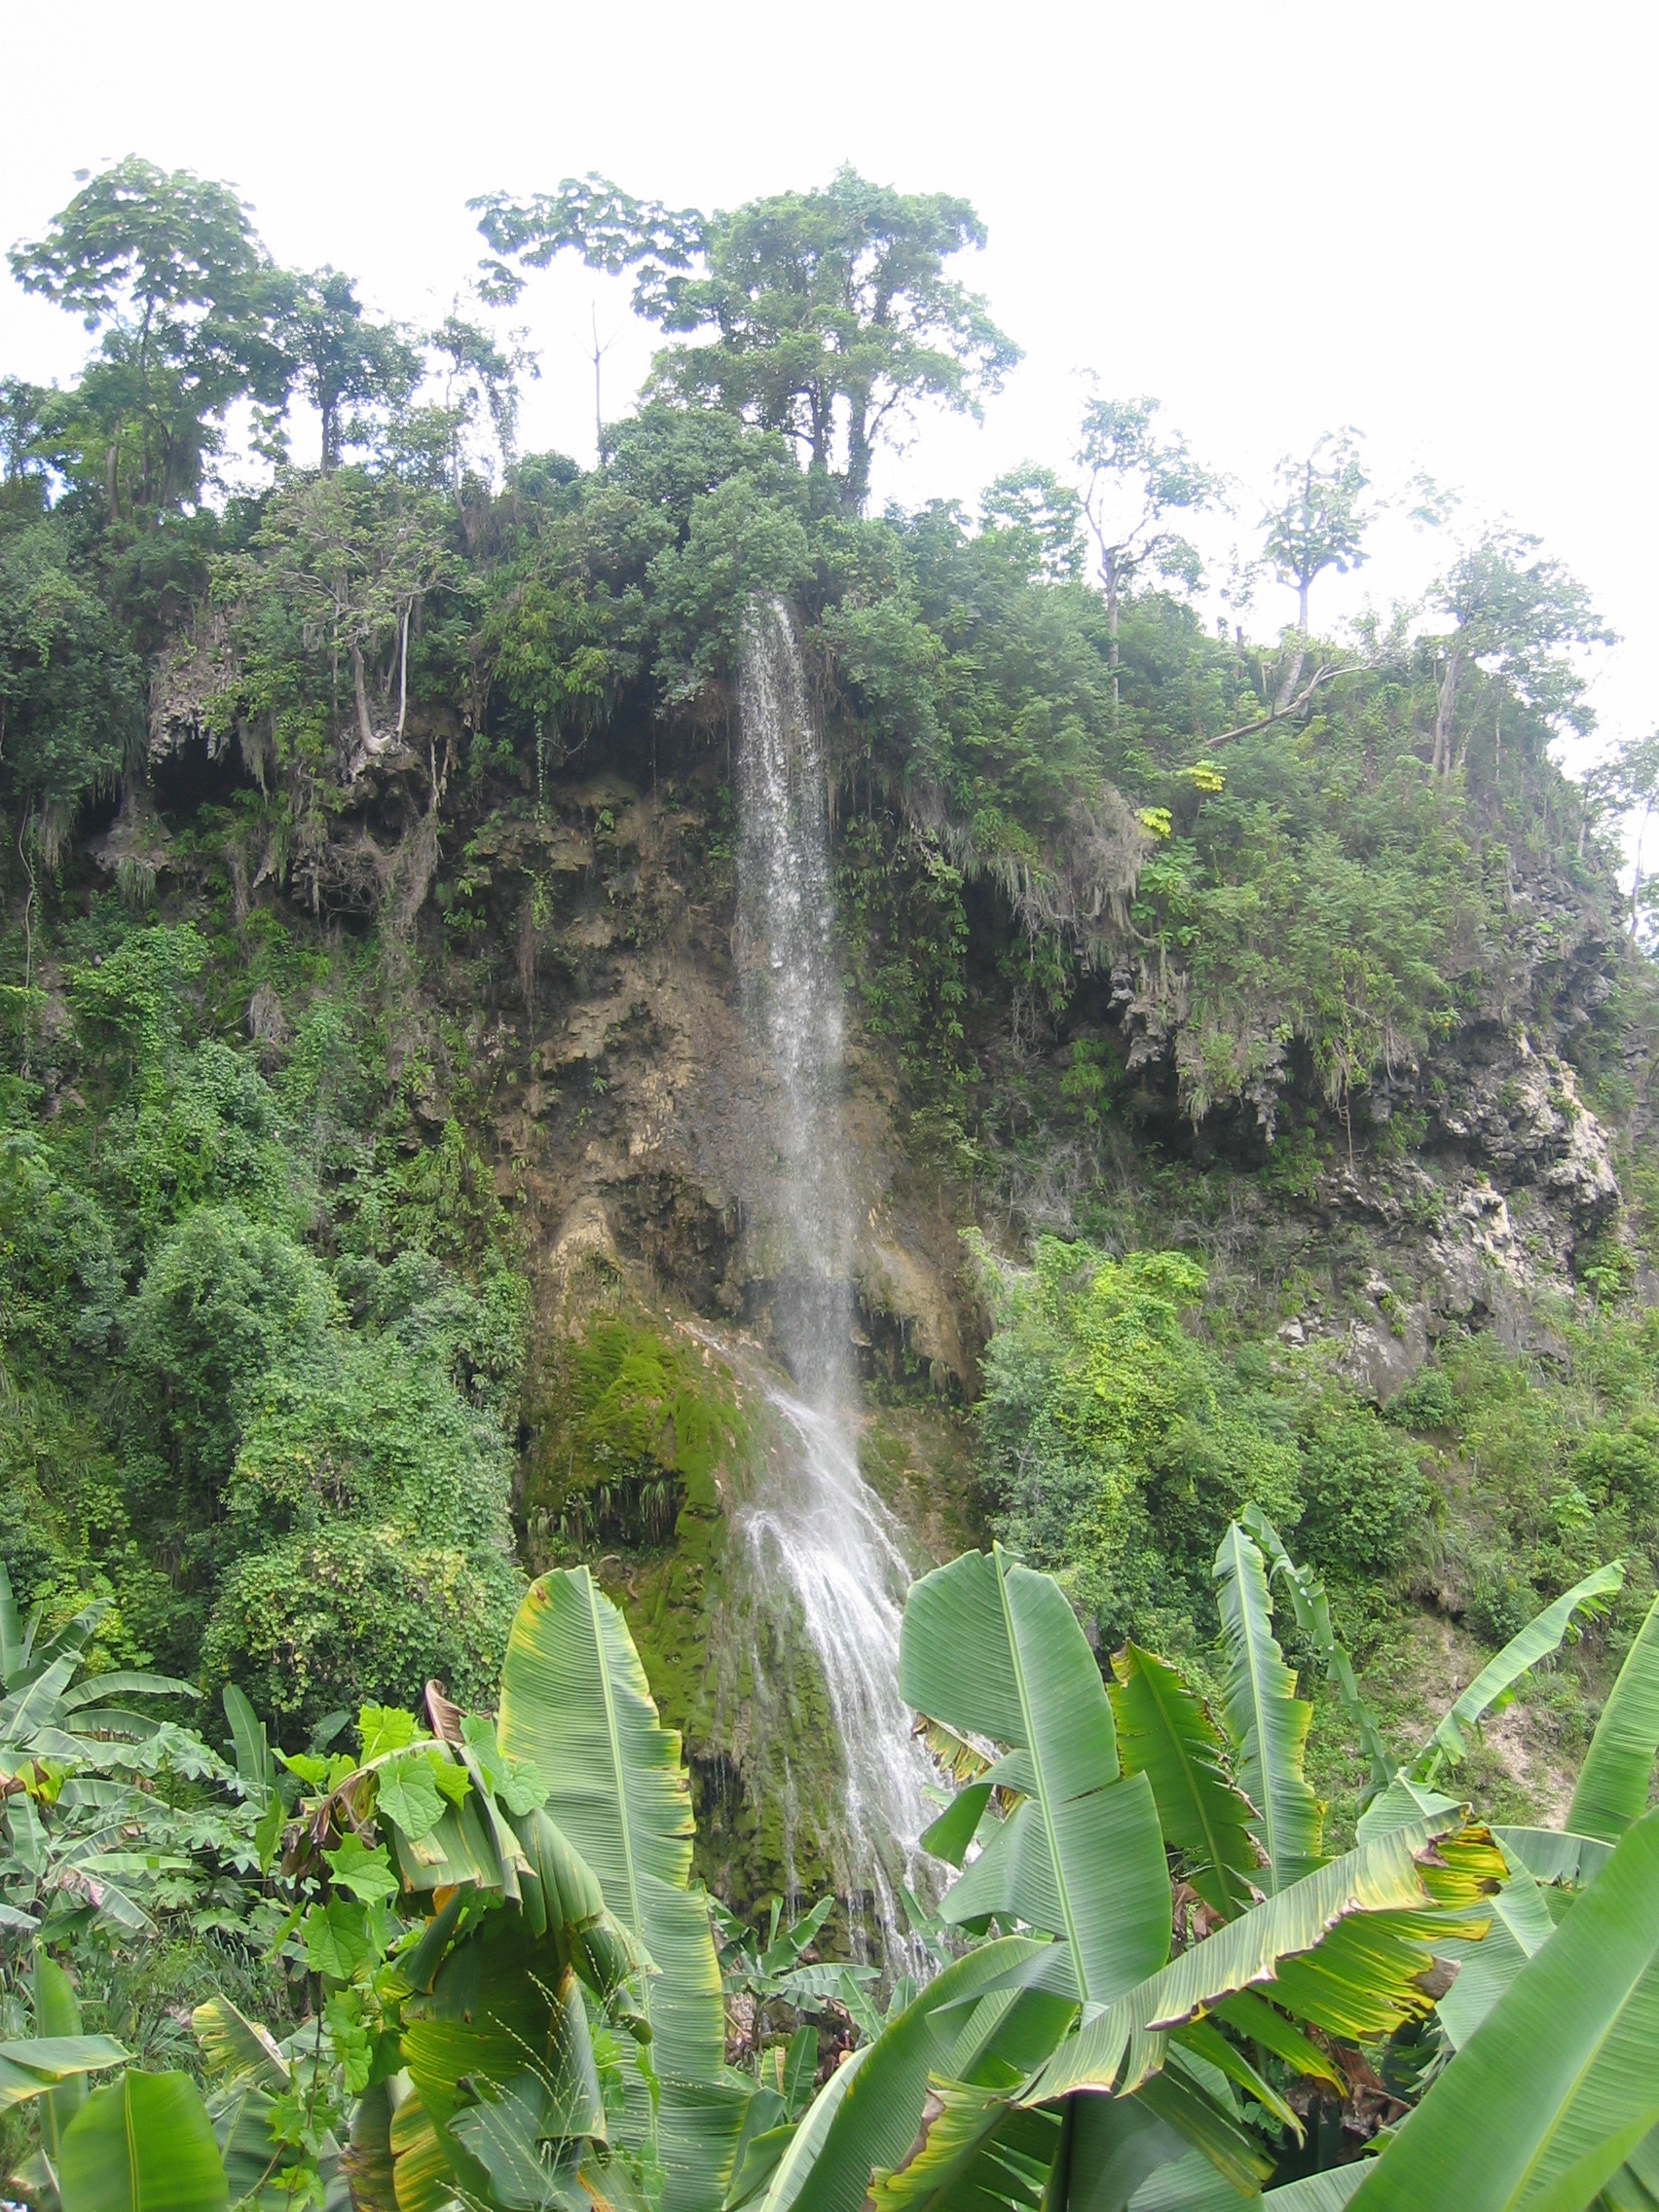  Part of the waterfalls of Sodo (Saut d'Eau). 